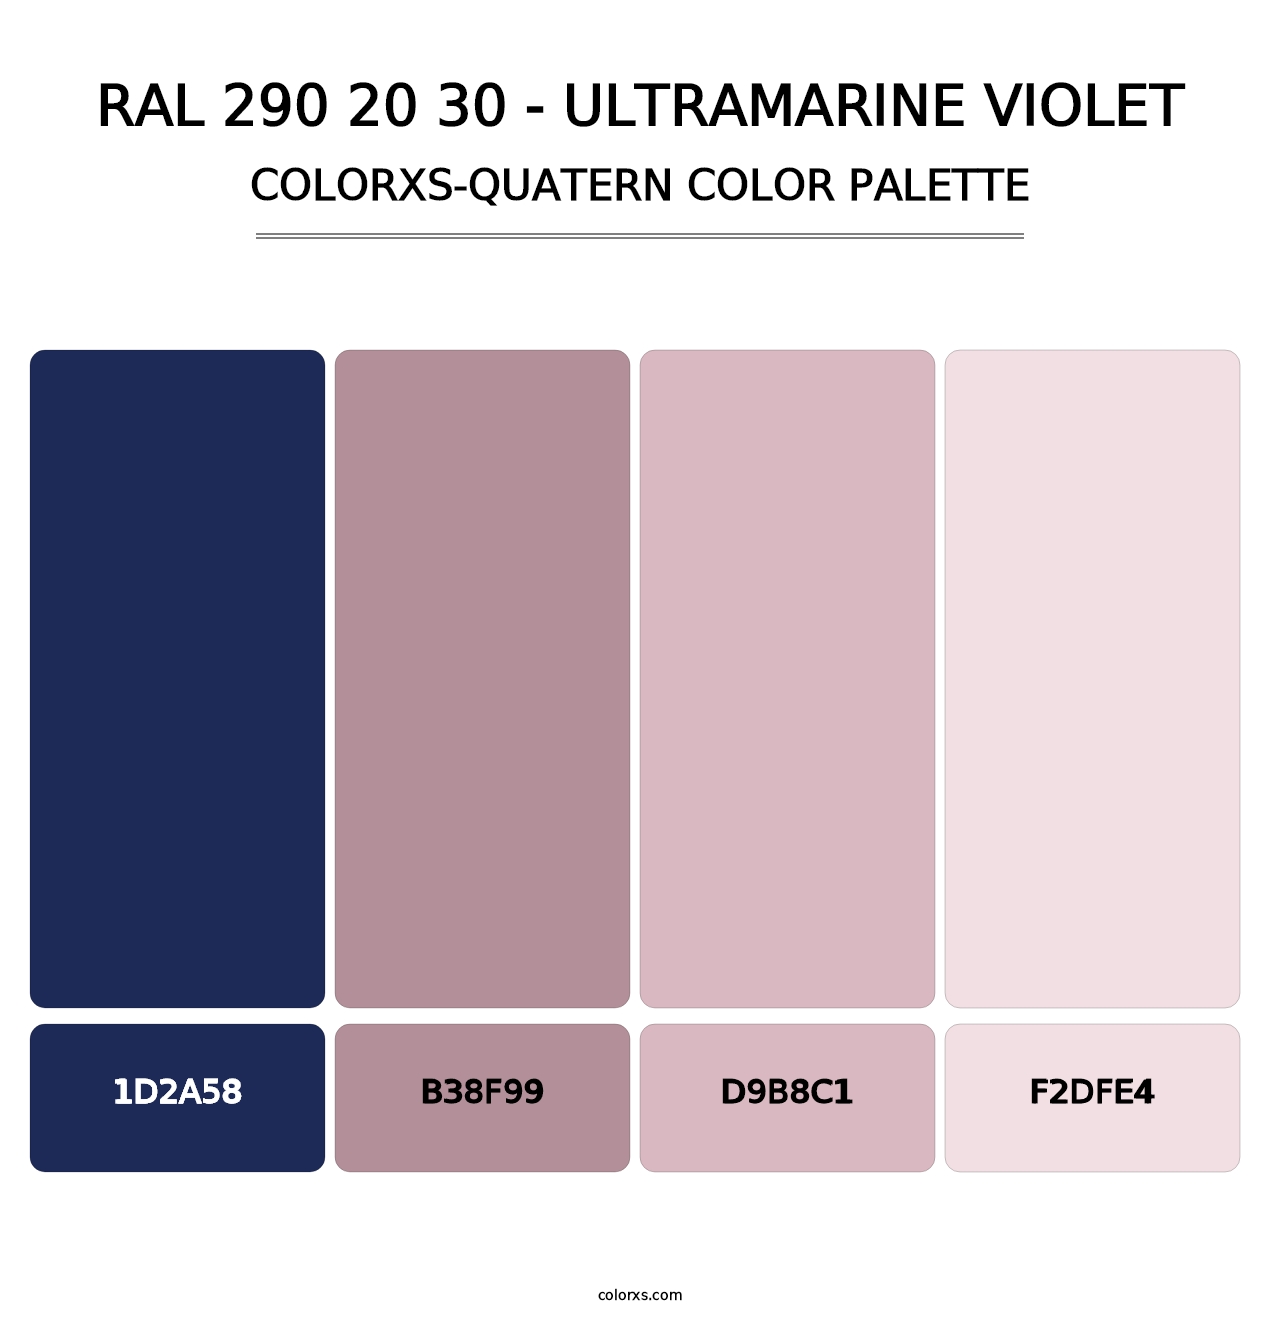 RAL 290 20 30 - Ultramarine Violet - Colorxs Quatern Palette